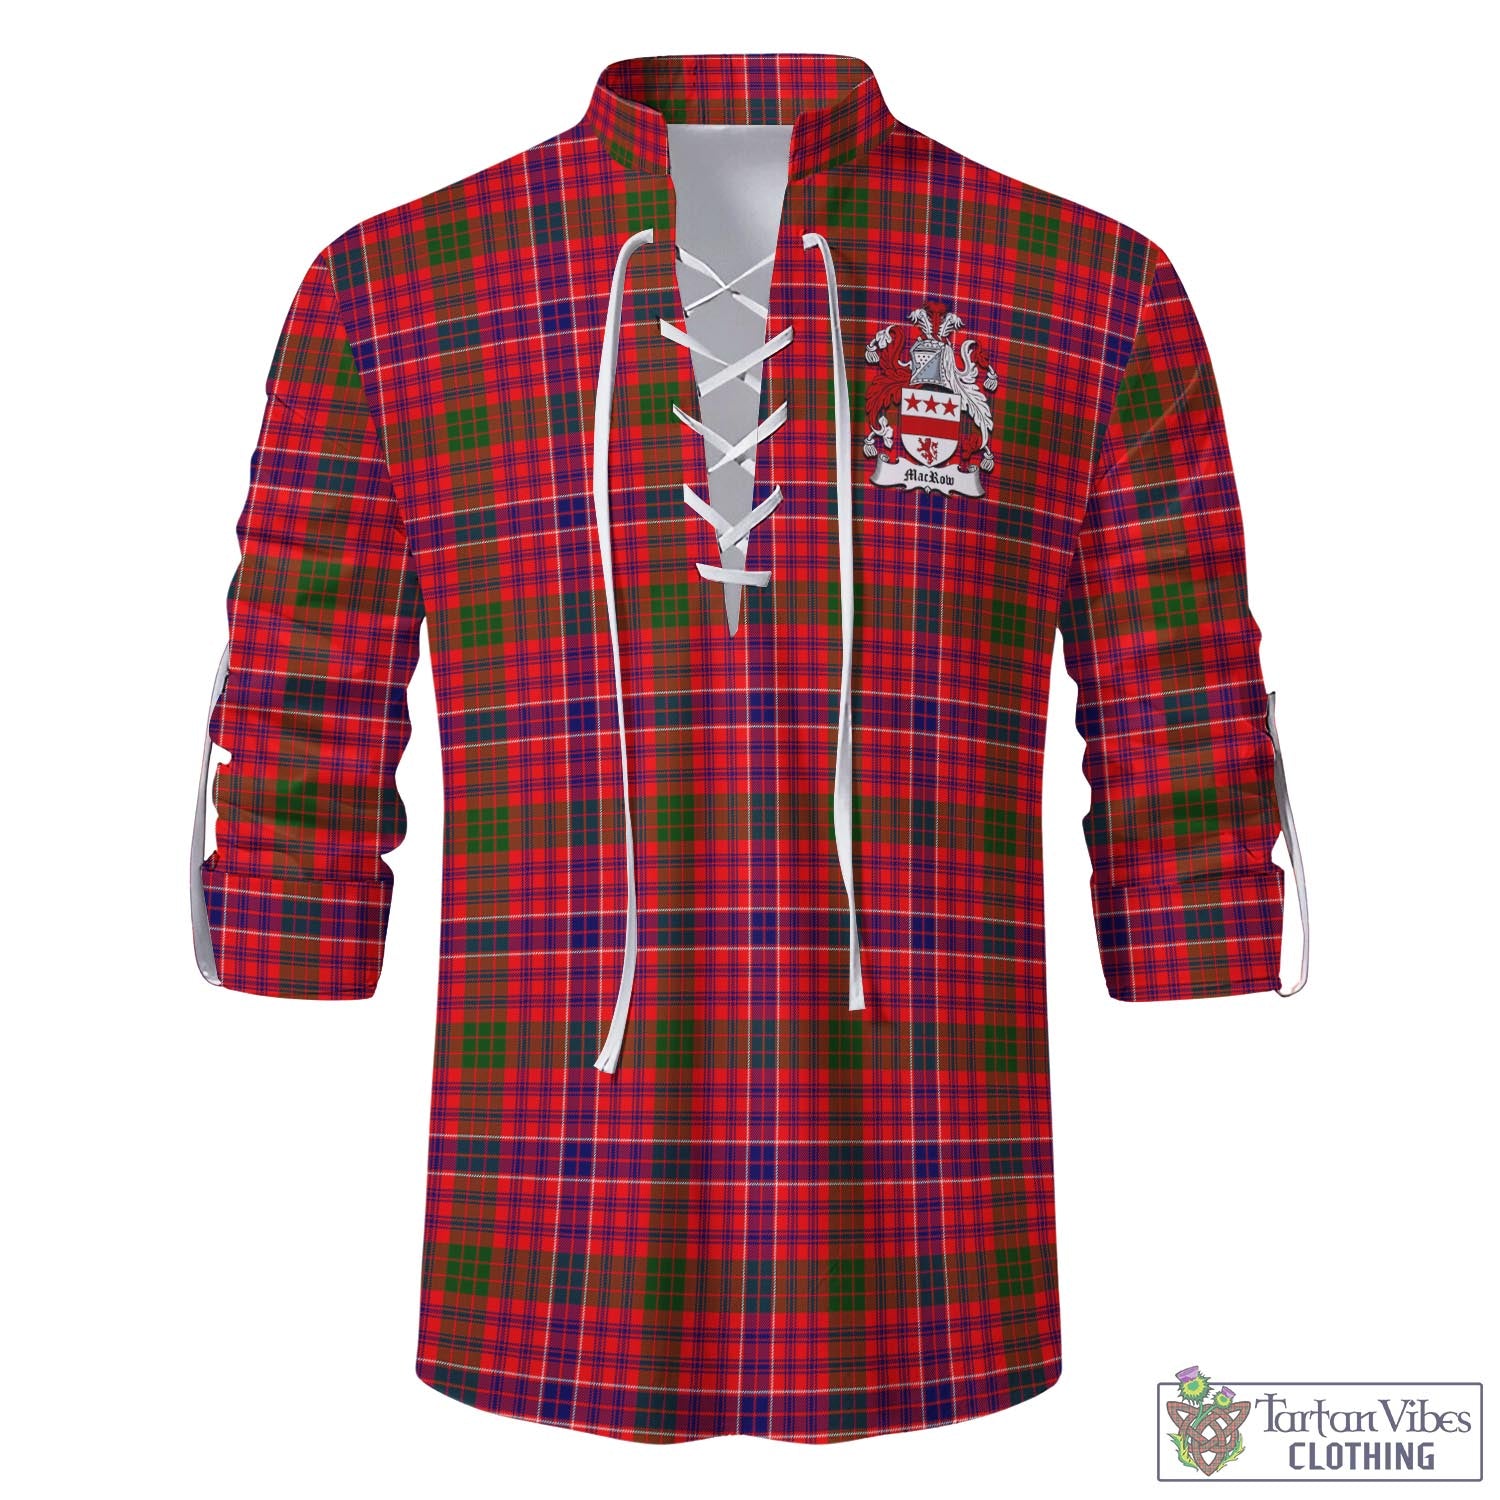 Tartan Vibes Clothing MacRow Tartan Men's Scottish Traditional Jacobite Ghillie Kilt Shirt with Family Crest